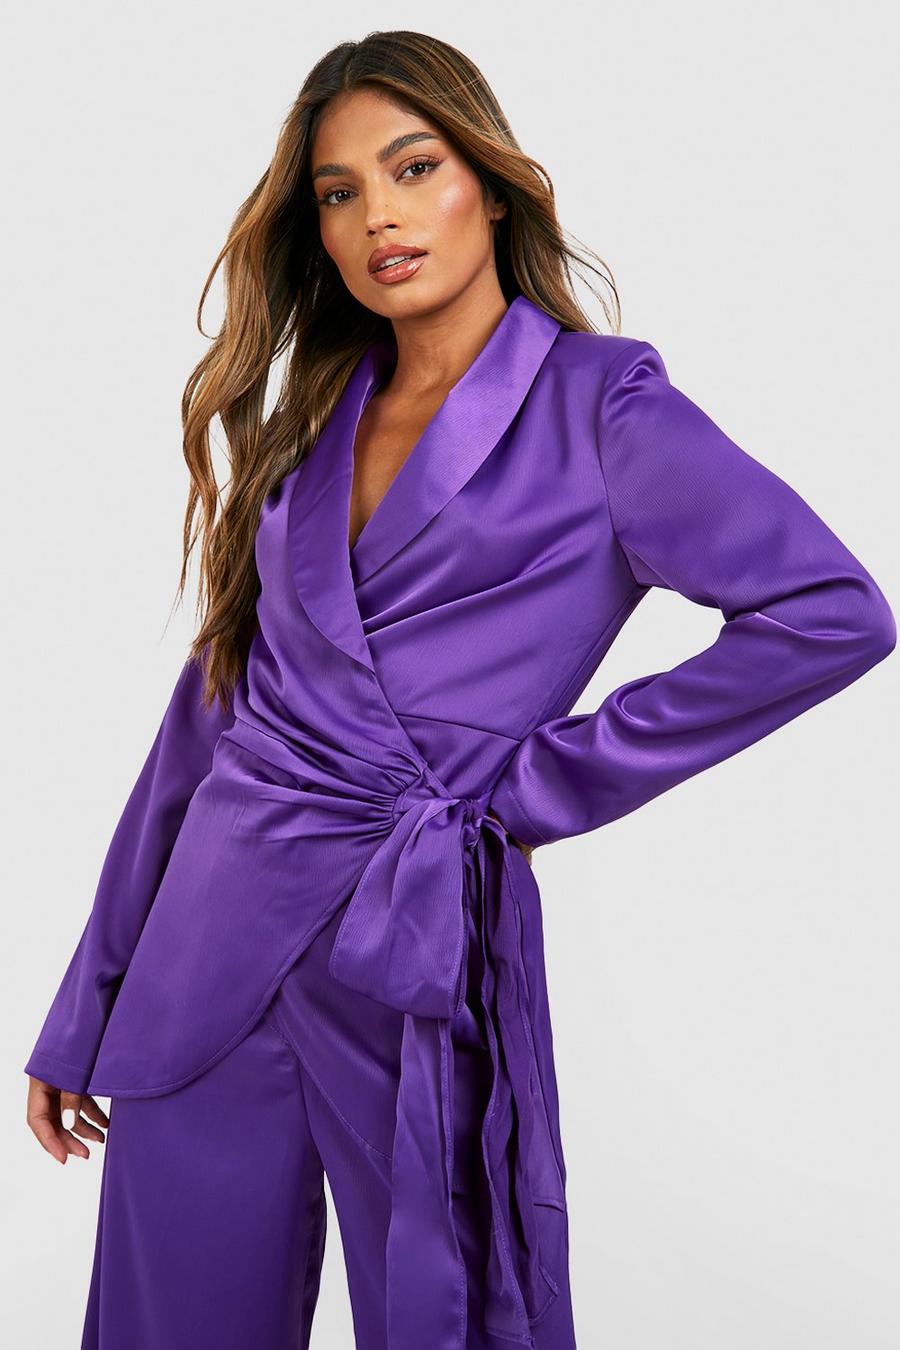 Jewel purple Matte Satin Drape Front Belted Shirt 